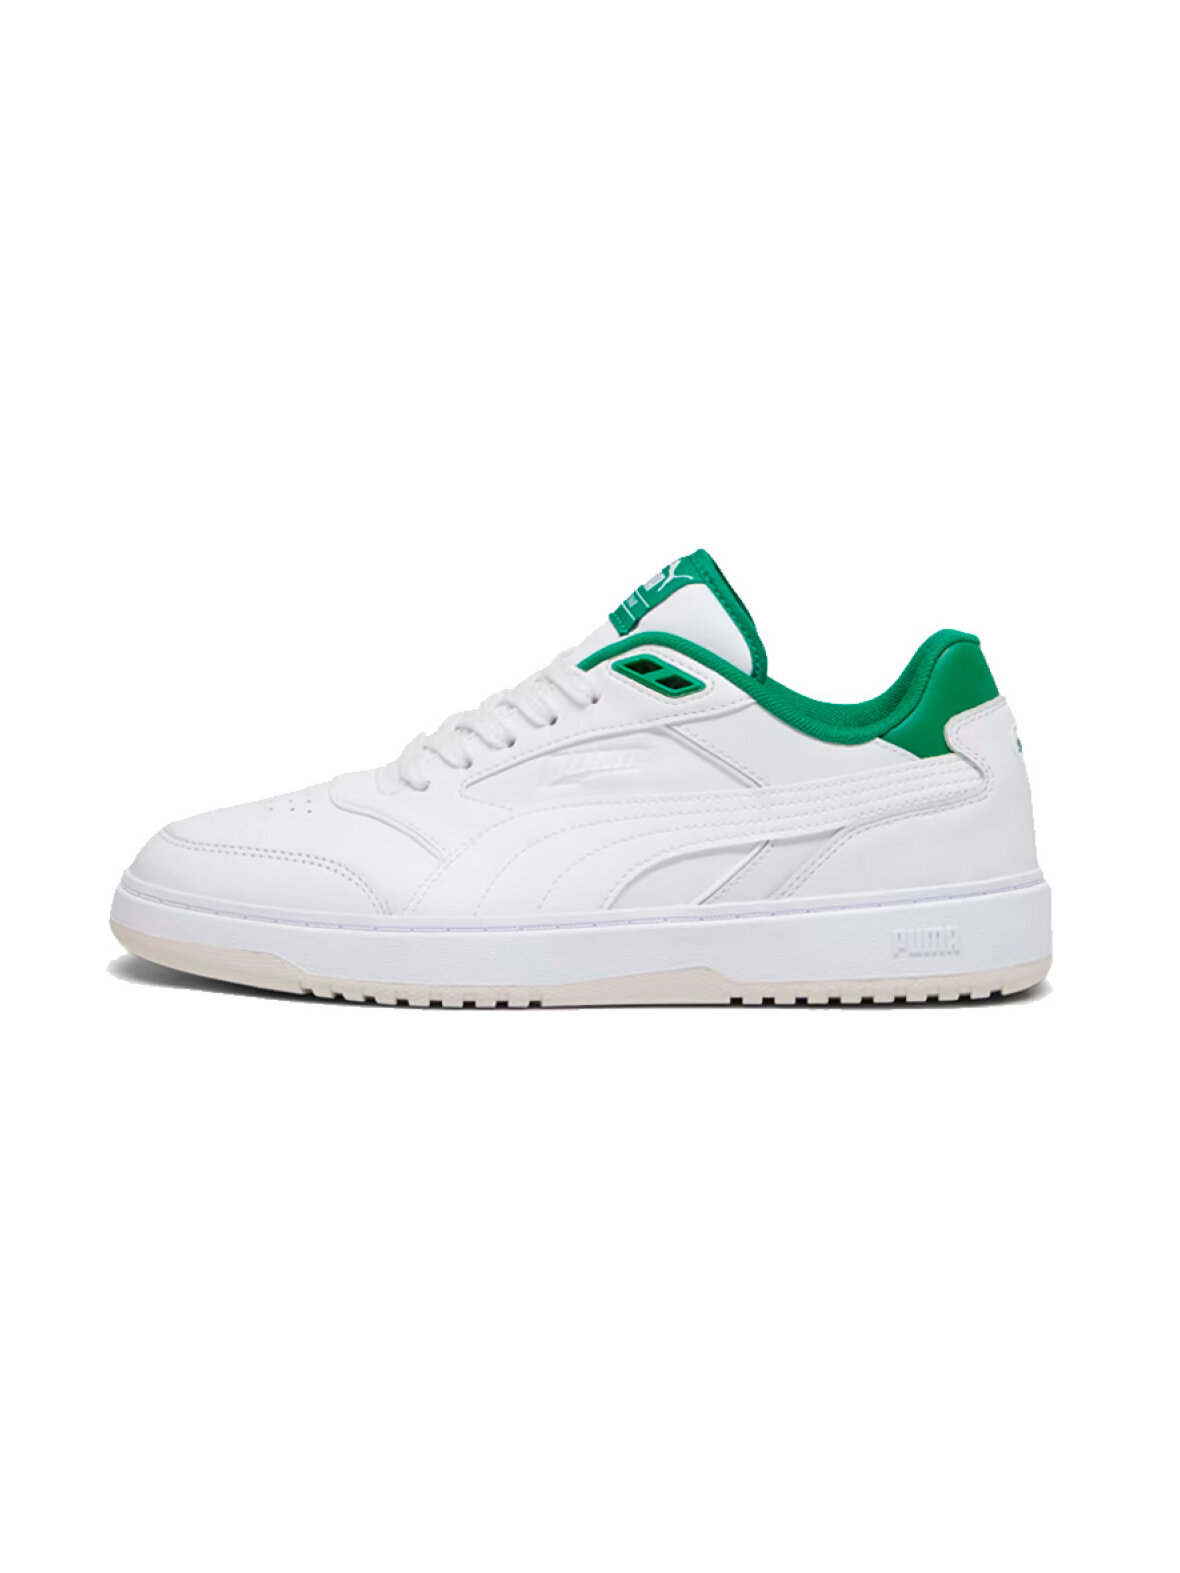 A'POKE Puma Doublecourt Sneakers White Archive Green